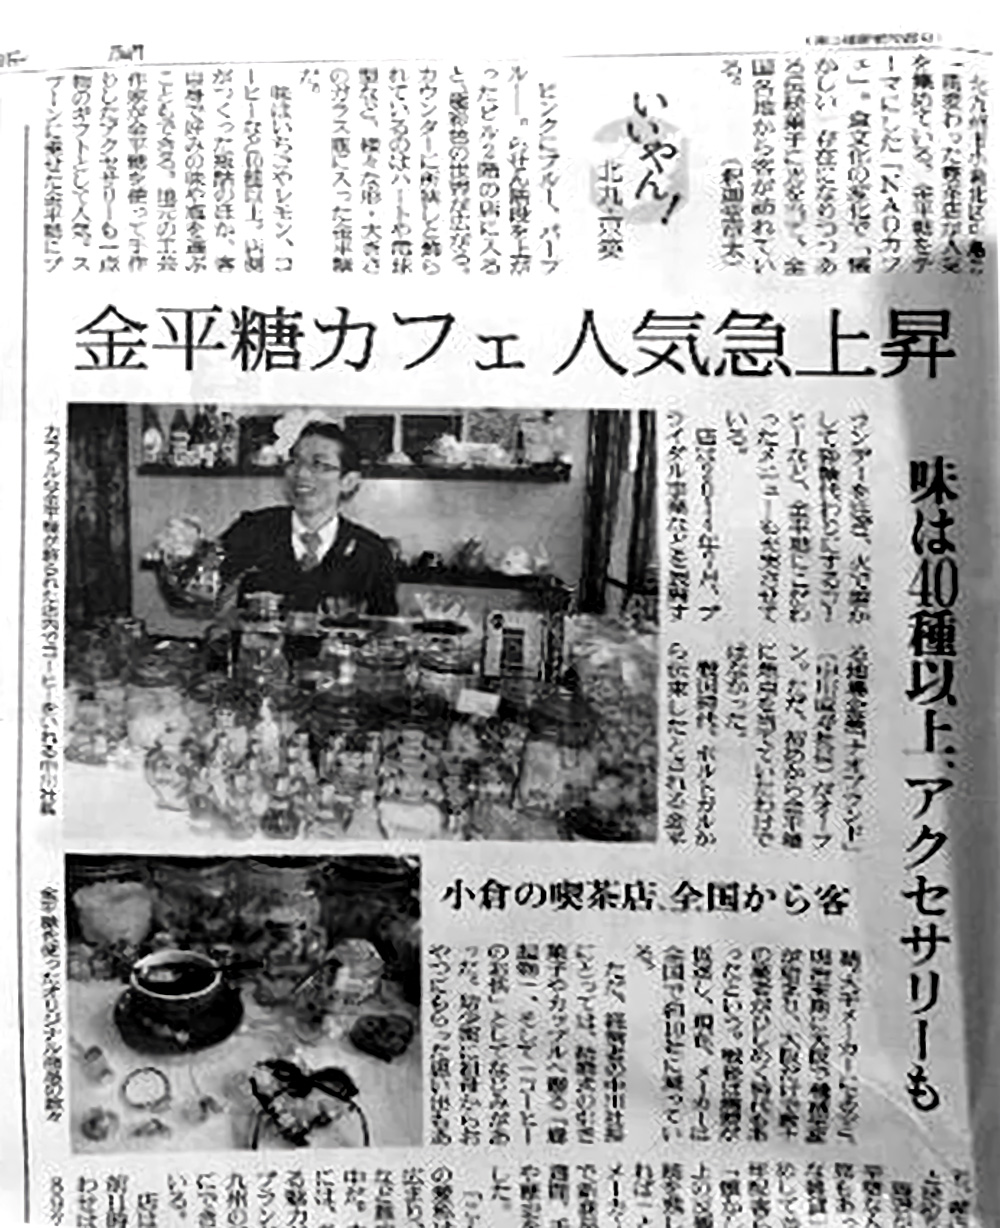 Yomiurinewspaper